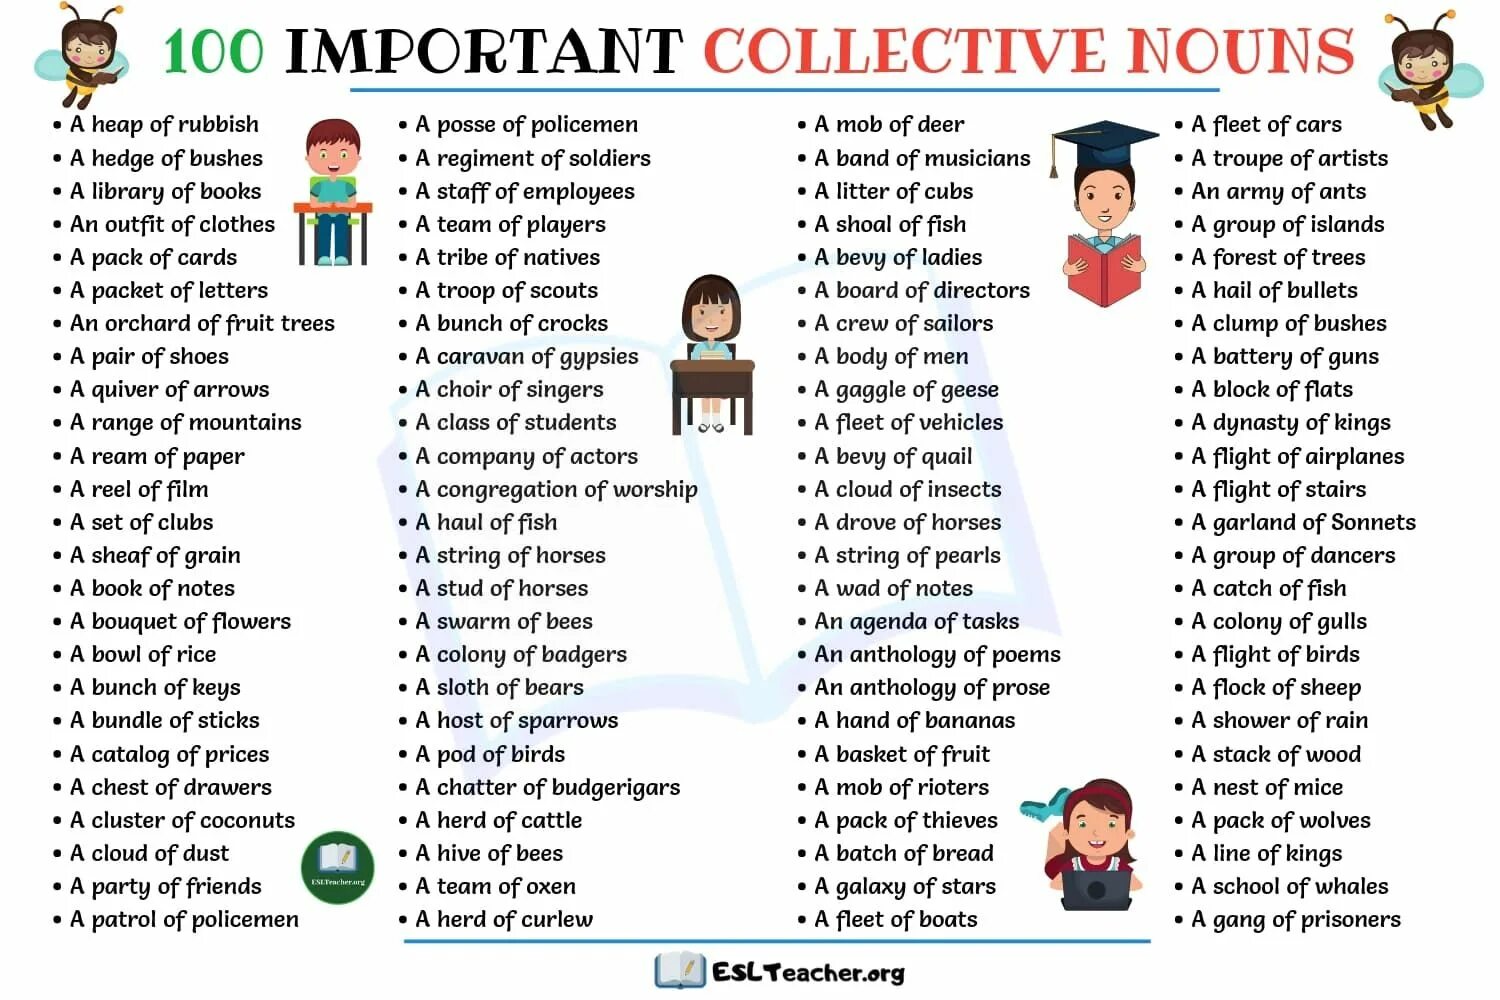 Collective Noun is. Collective Nouns в английском. Collective Nouns in English.